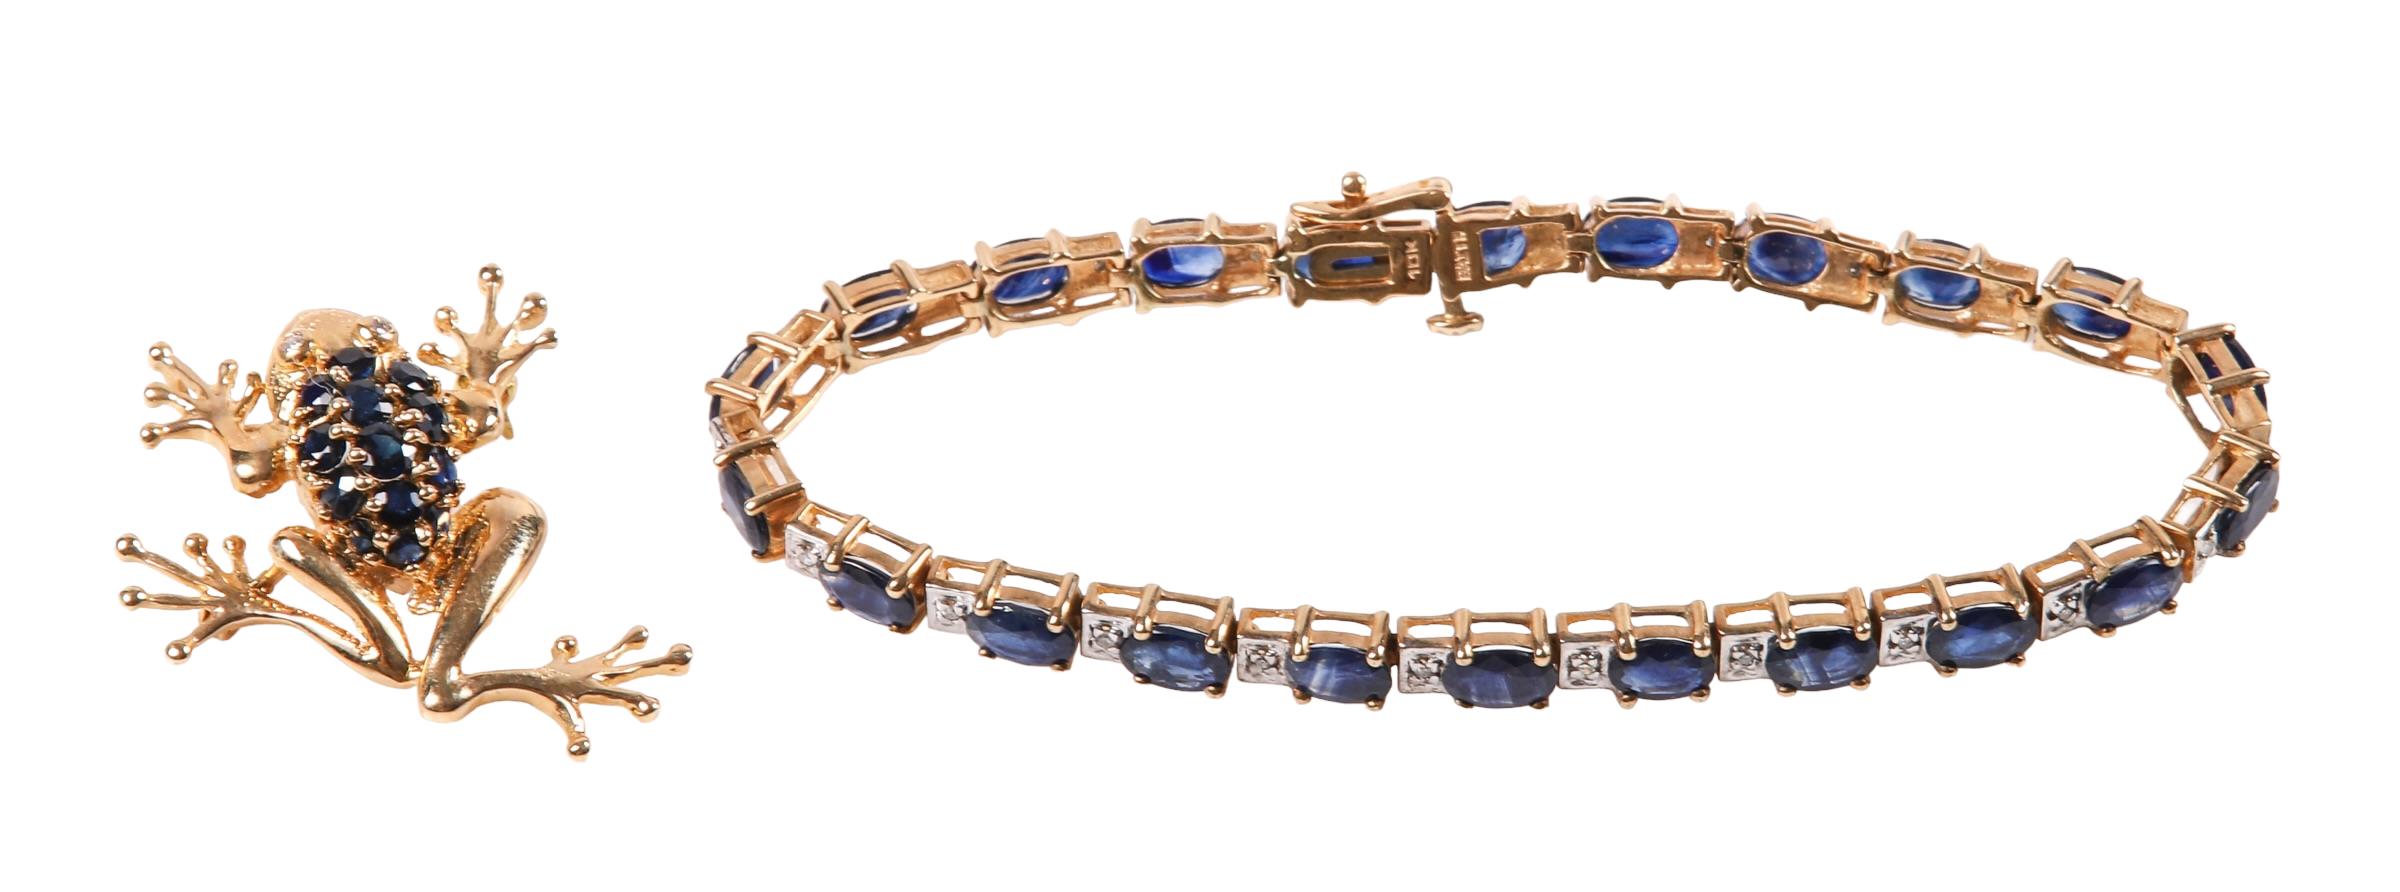 Sapphire tennis bracelet at frog 27a3f5